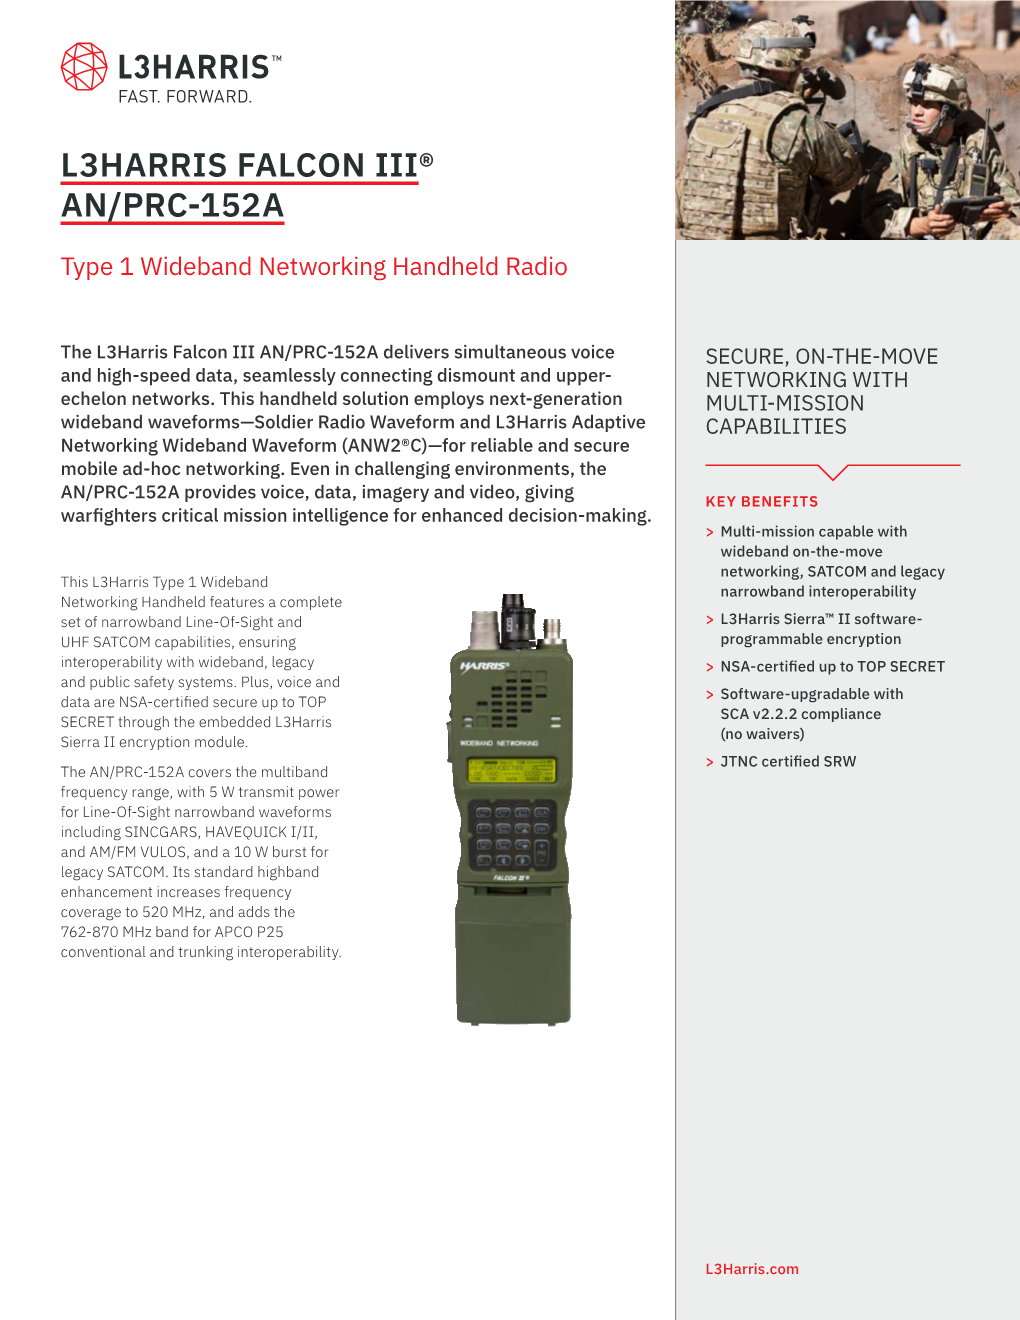 AN/PRC-152A Type 1 Wideband Networking Handheld Radio © 2019 L3harris Technologies, Inc